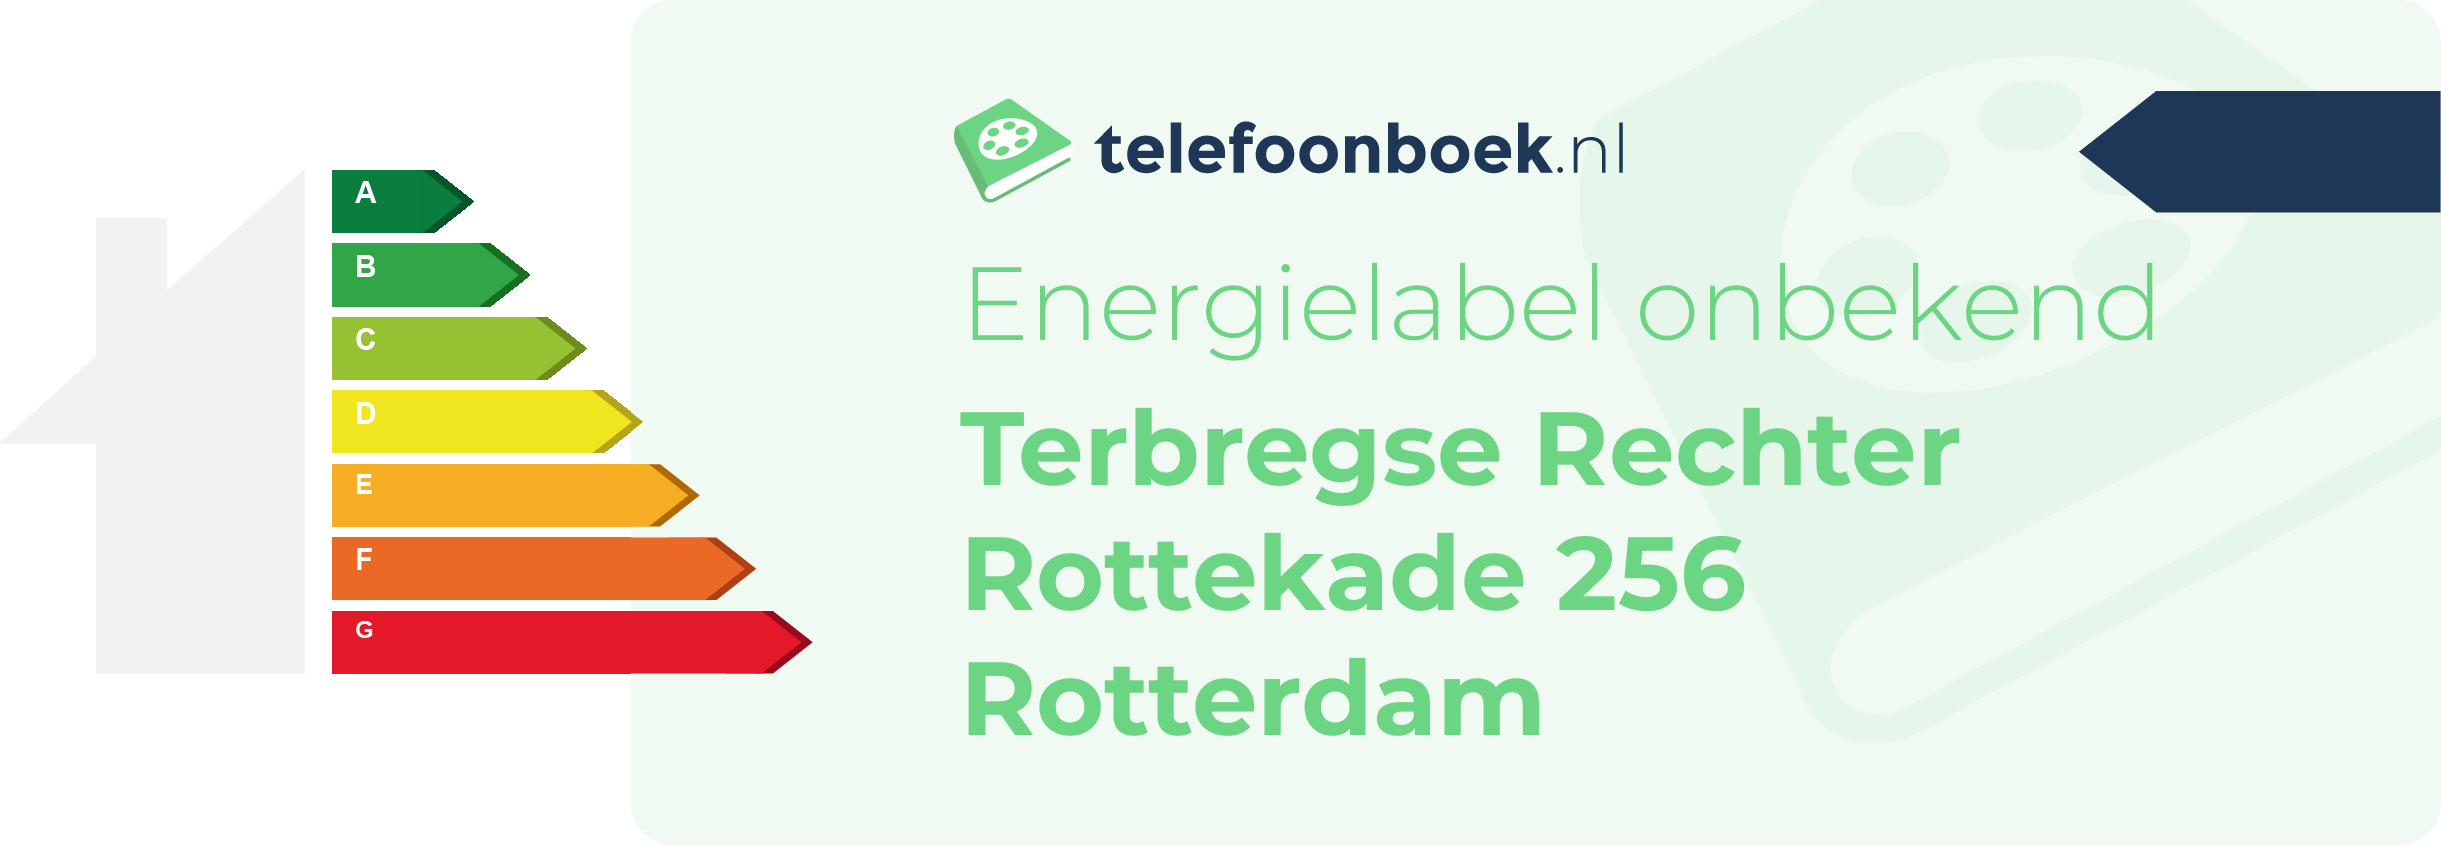 Energielabel Terbregse Rechter Rottekade 256 Rotterdam